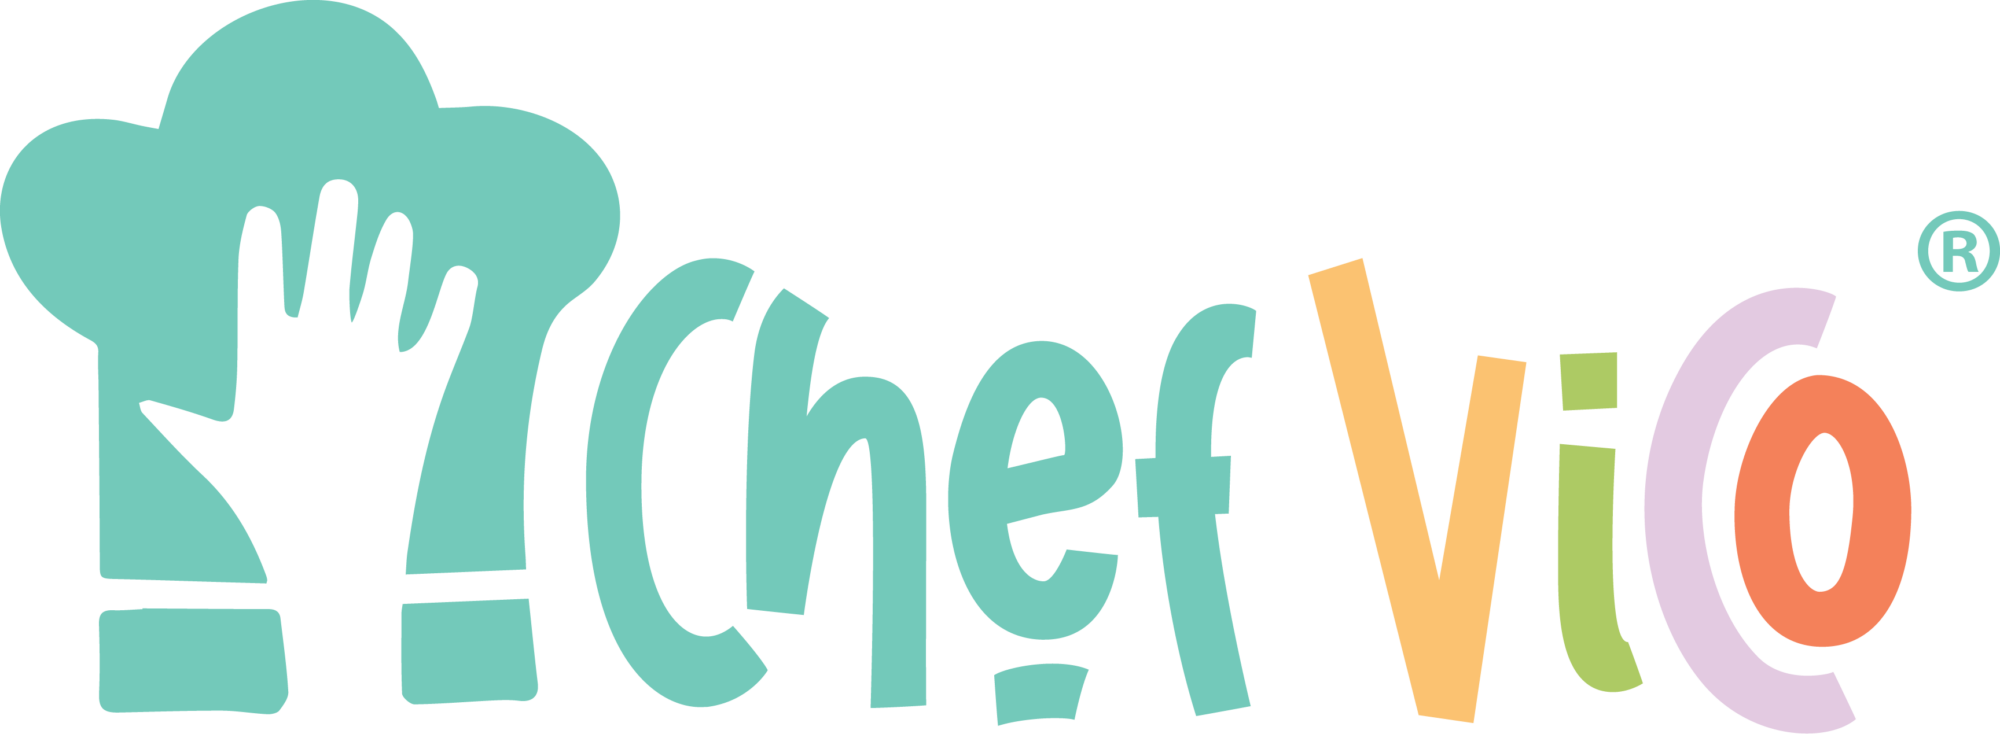 Chef Vico - Germany